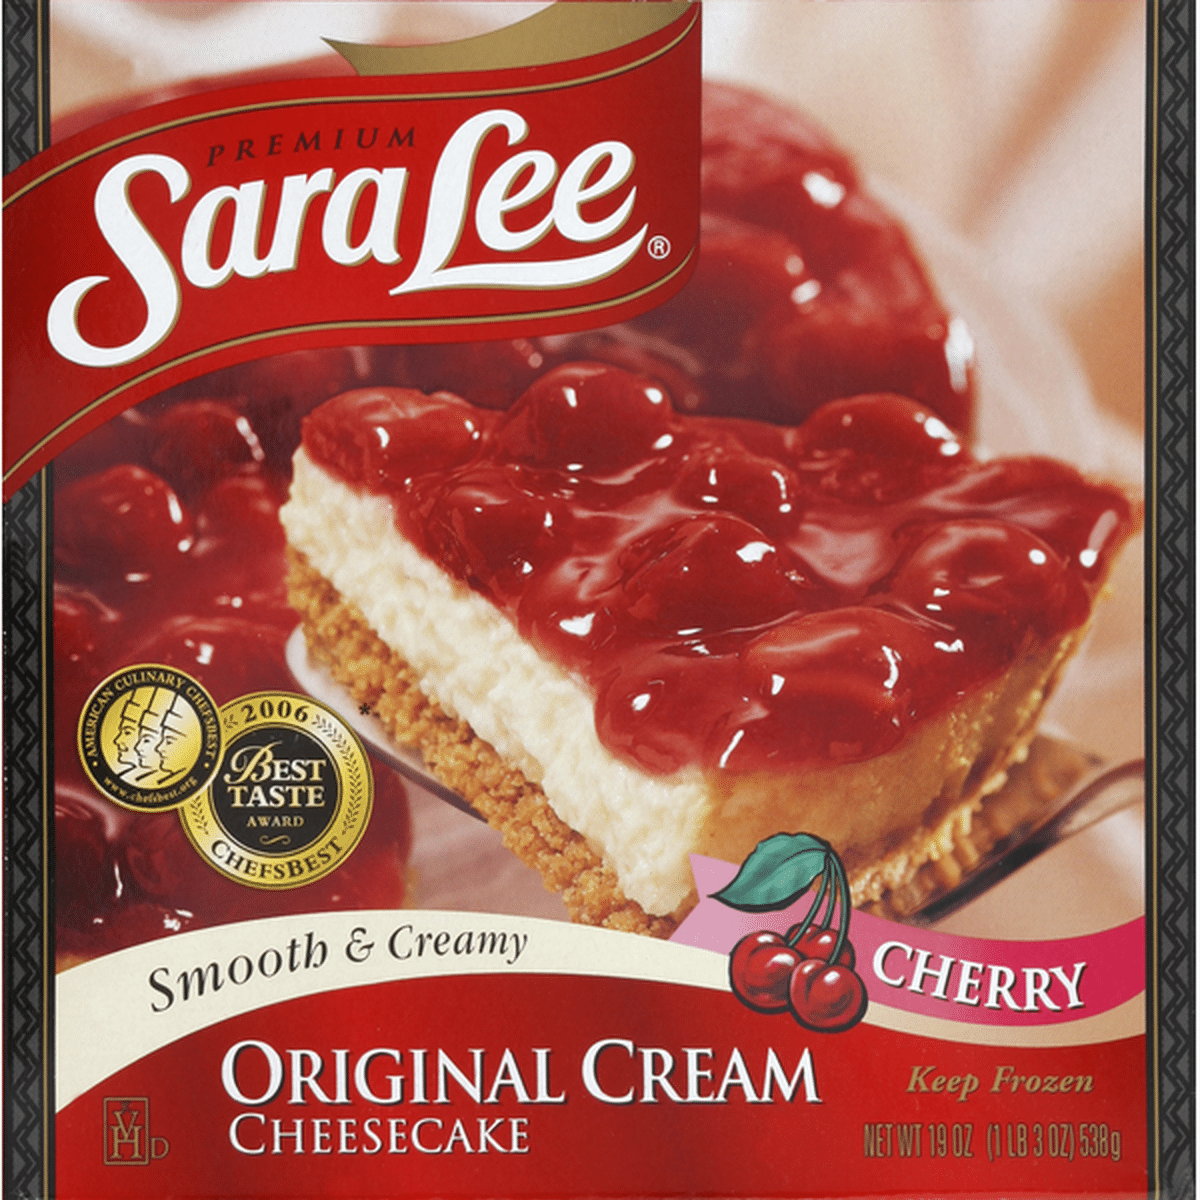 Sara Lee Cheesecake, Smooth & Creamy, Original Cream, Cherry (19 oz)  Delivery or Pickup Near Me - Instacart